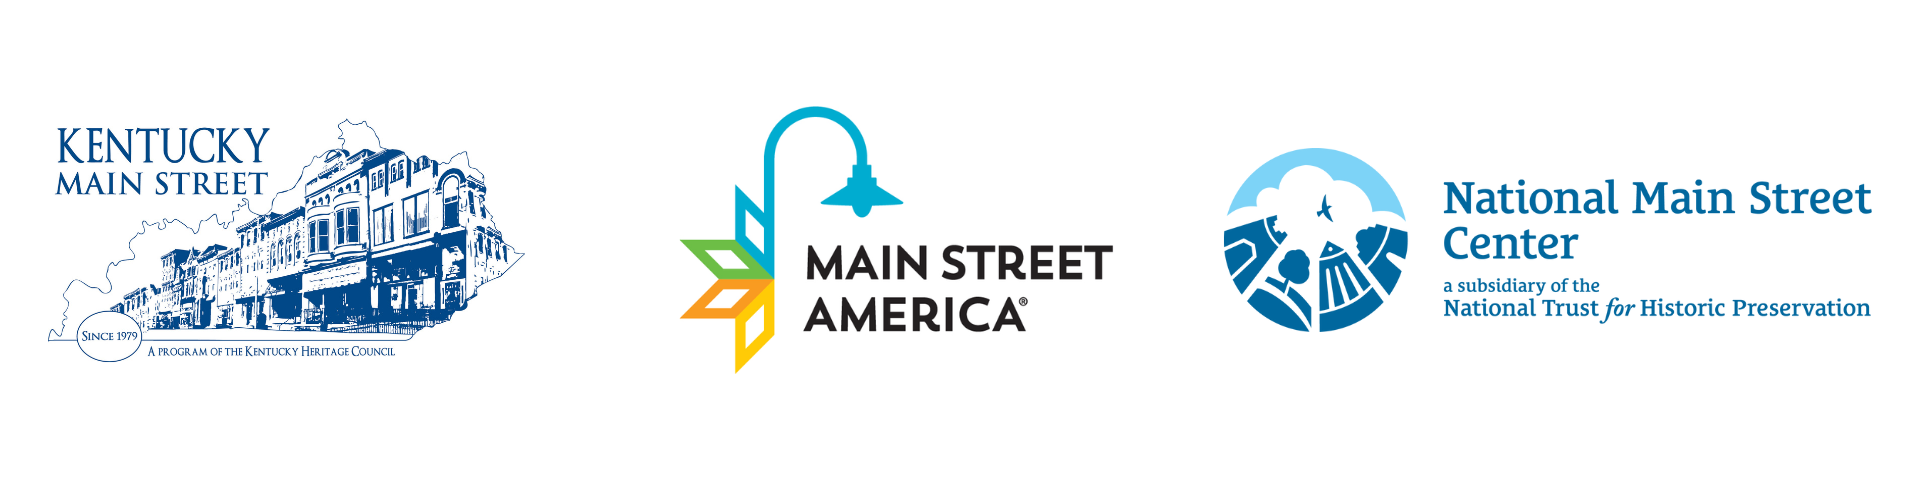 Main Street America and Kentucky Main Street logo.png